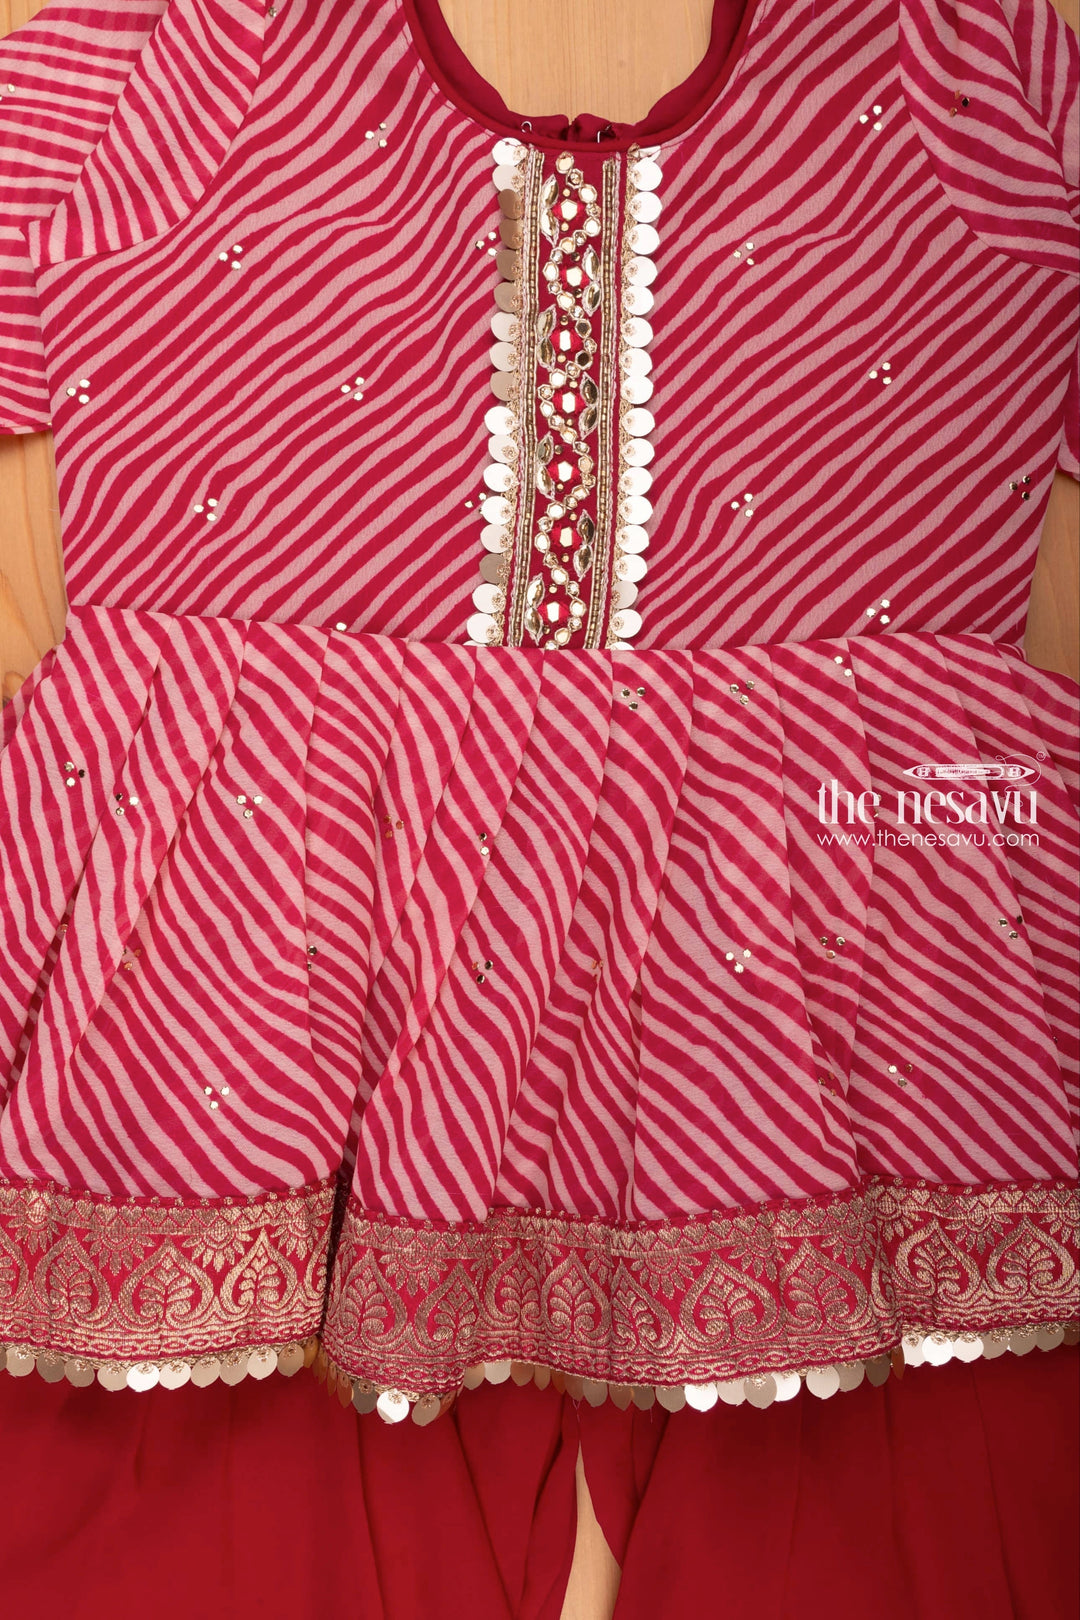 The Nesavu Girls Sharara / Plazo set Elegant Sequin Striped Red Kurti & Palazzo: Classic Festive Charm for Girls Nesavu Indian Ethnic Traditional Wear | Kurti With Palazzo Pant for Girls Online | the Nesavu